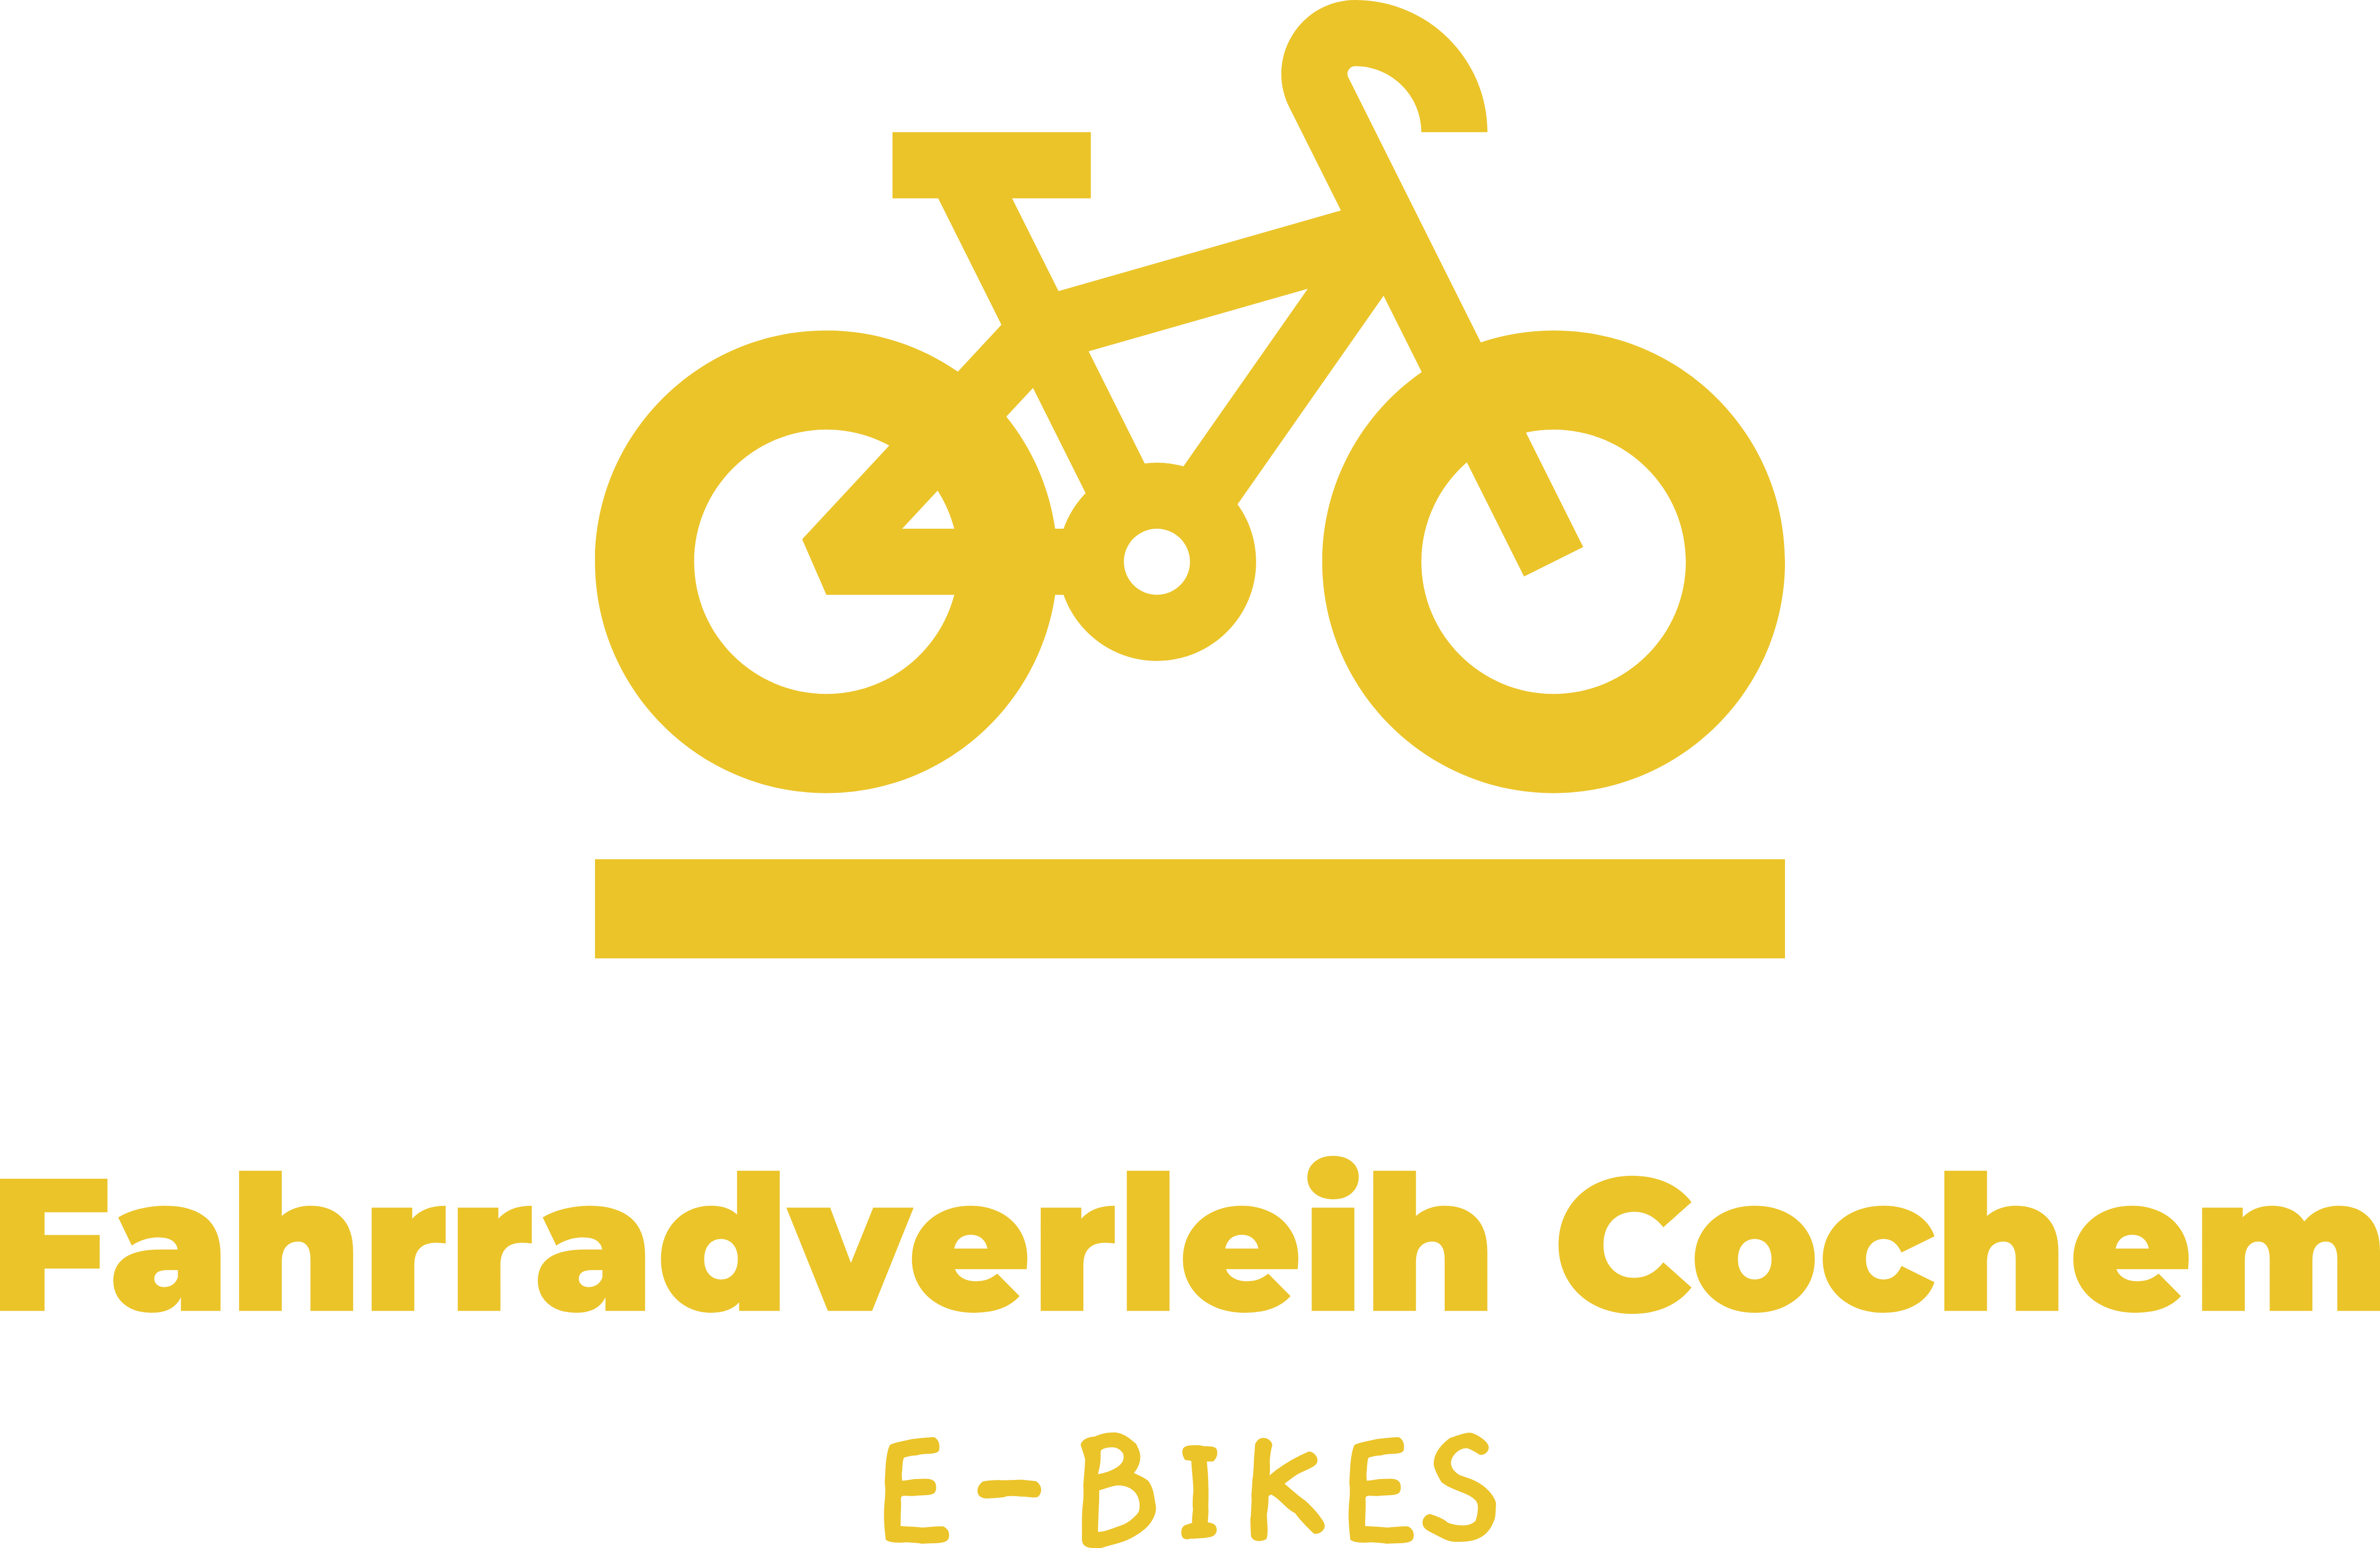 Fahrradverleih Cochem